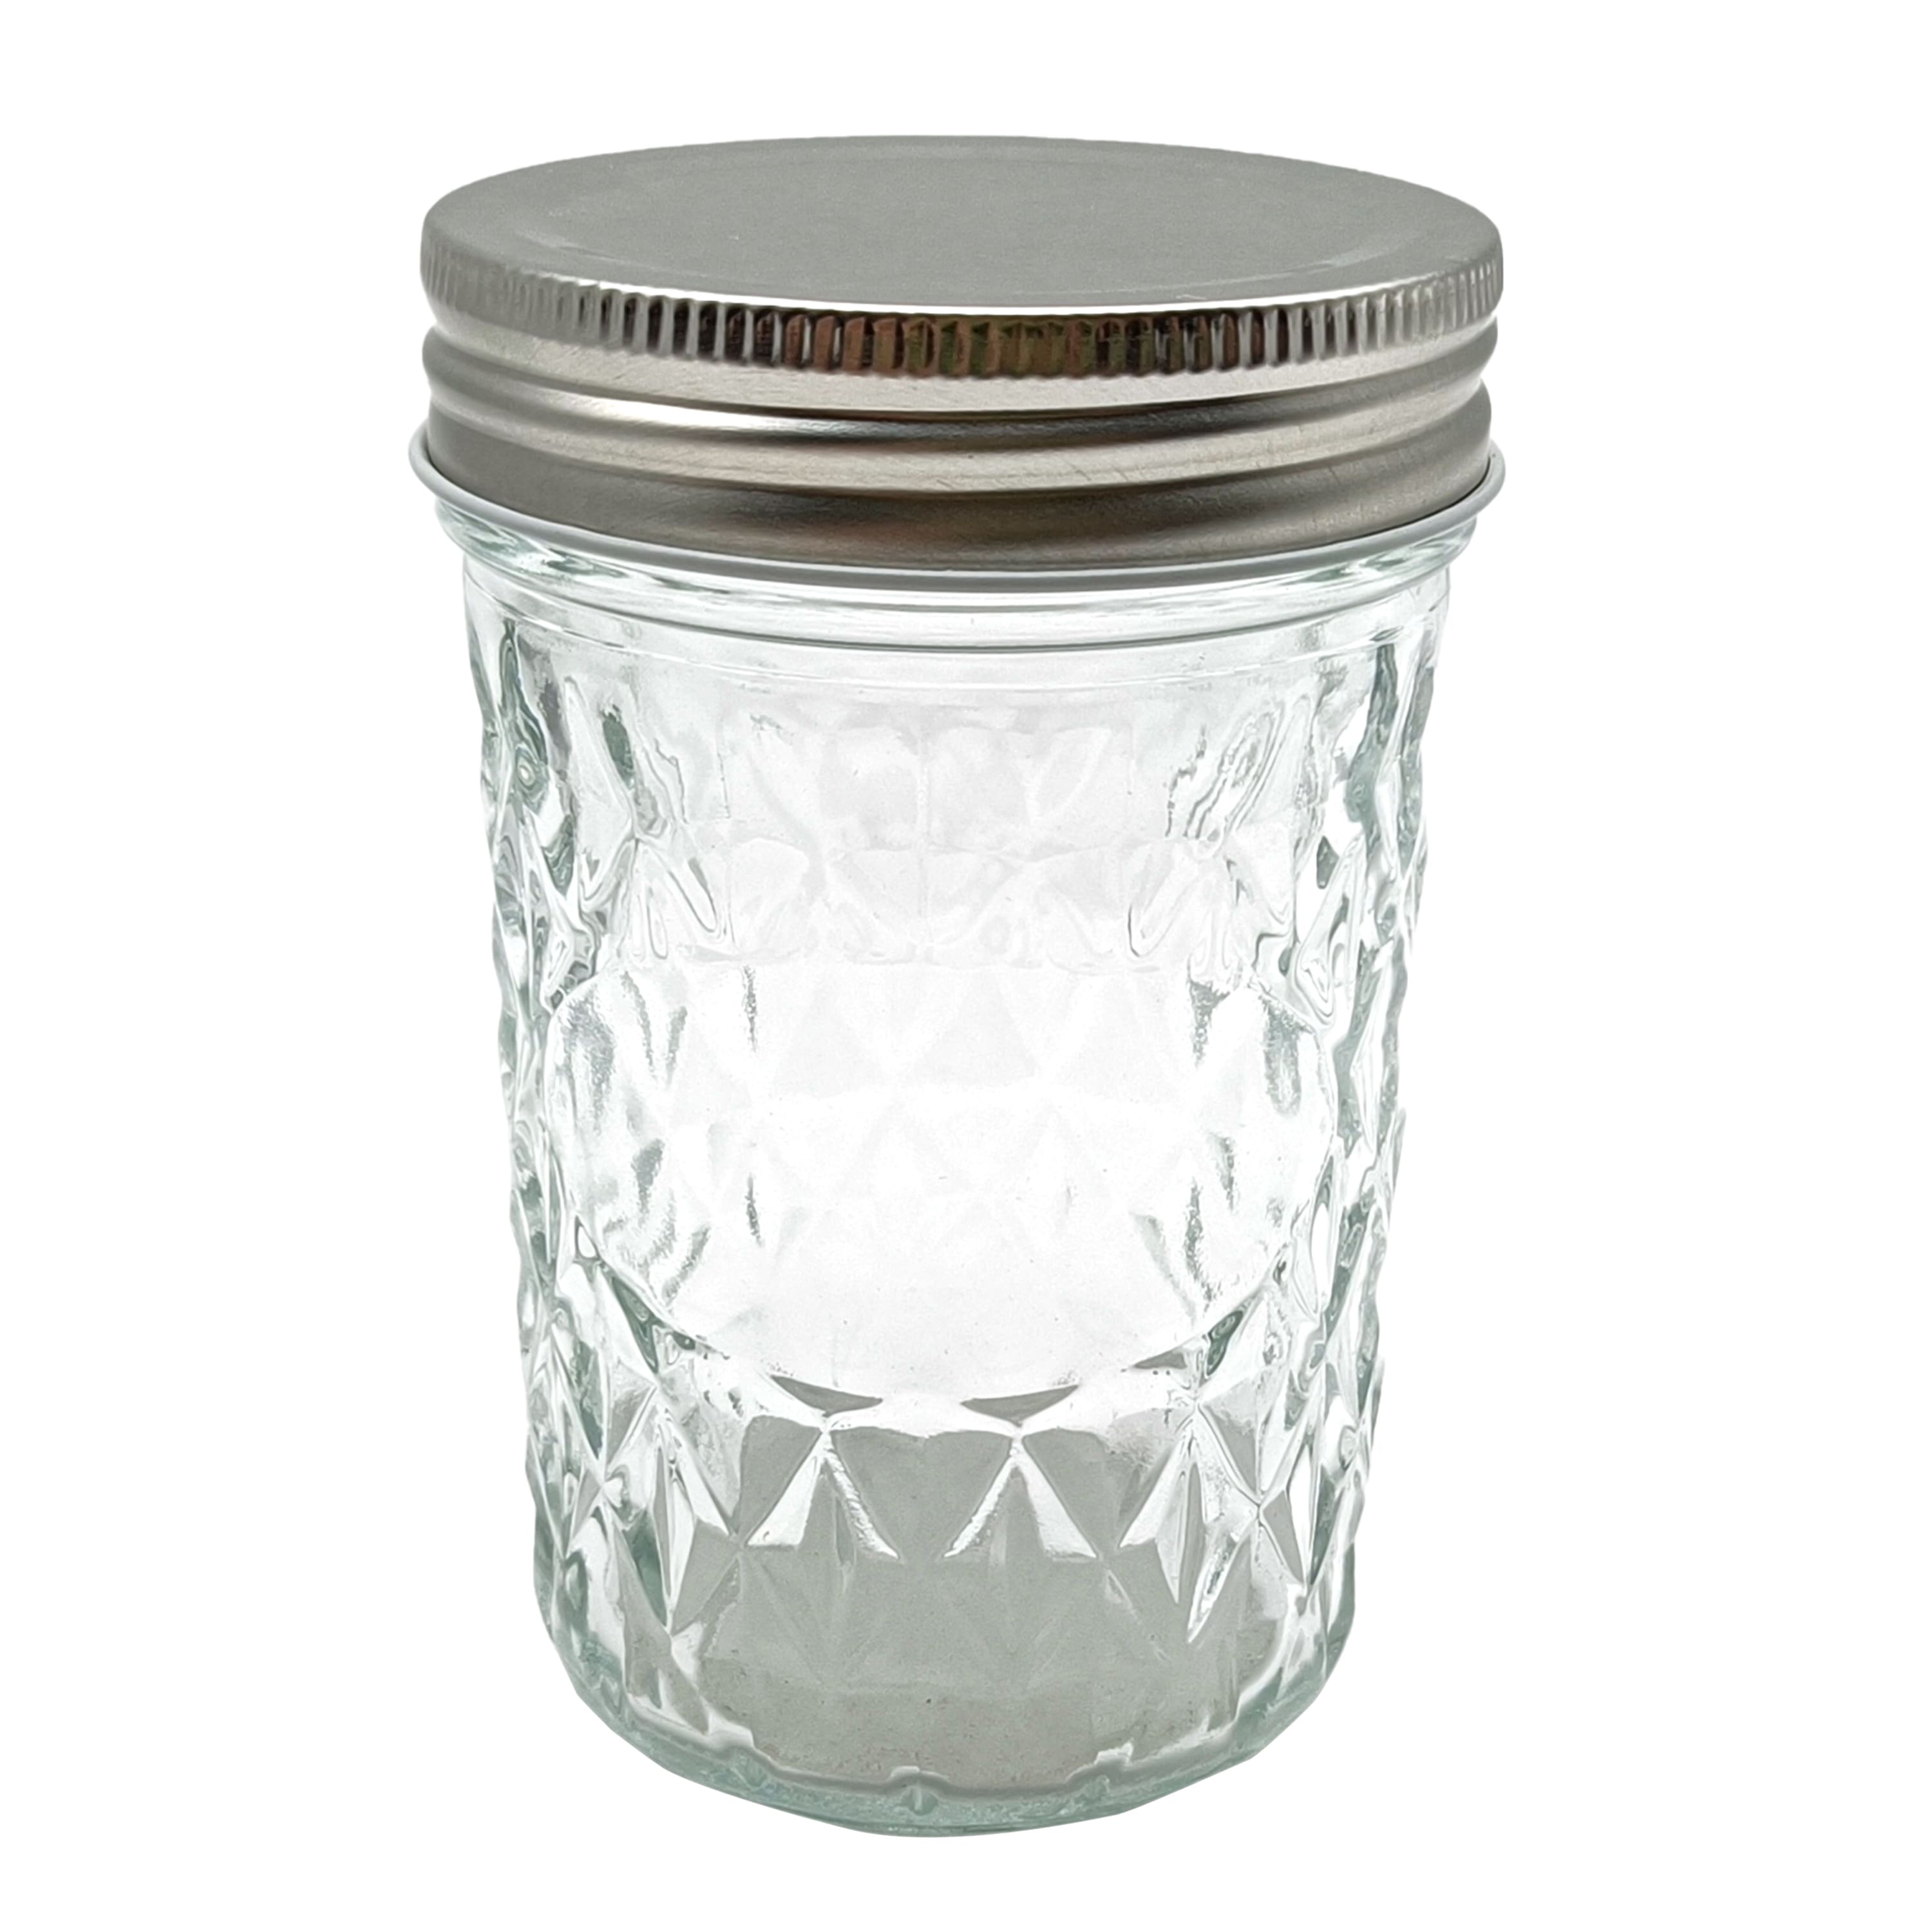 8 oz Mason Glass Jars 12 Count